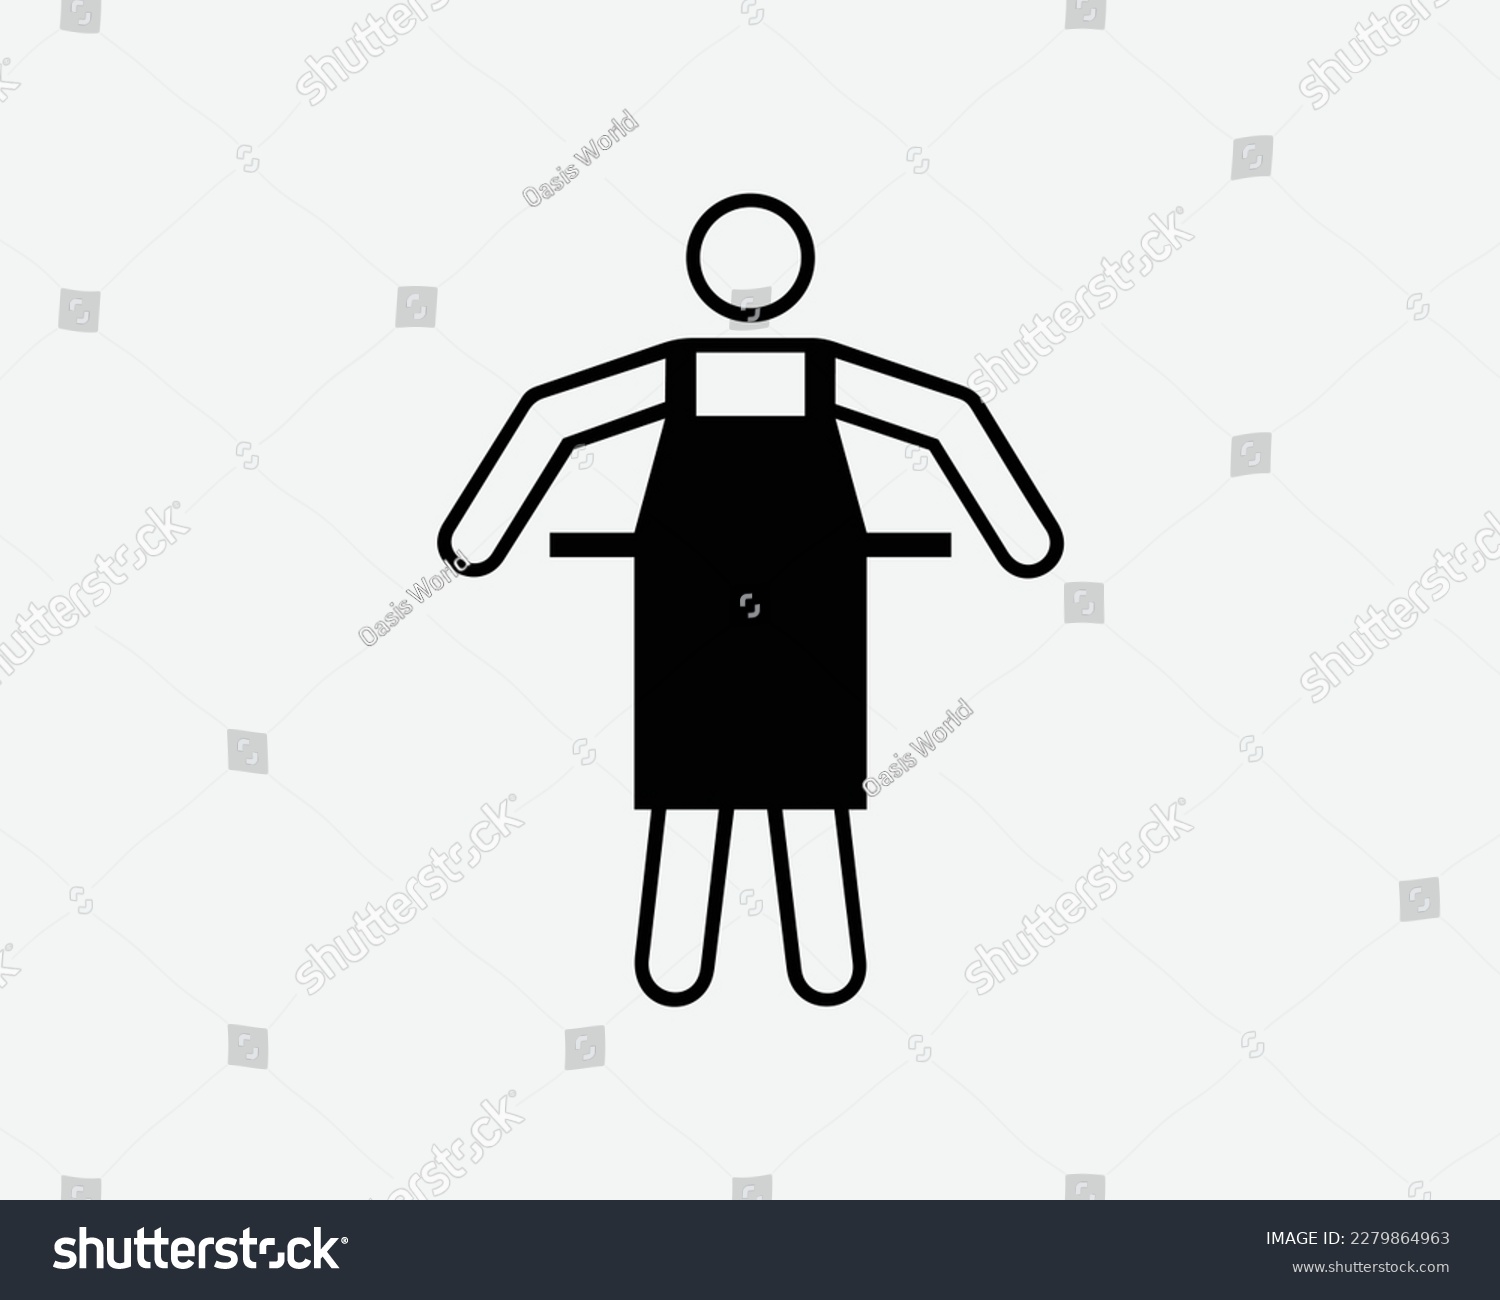 SVG of Wearing Apron Icon Stick Figure Man Kitchen Chef Cook Garment Black White Silhouette Symbol Sign Graphic Clipart Artwork Illustration Pictogram Vector svg